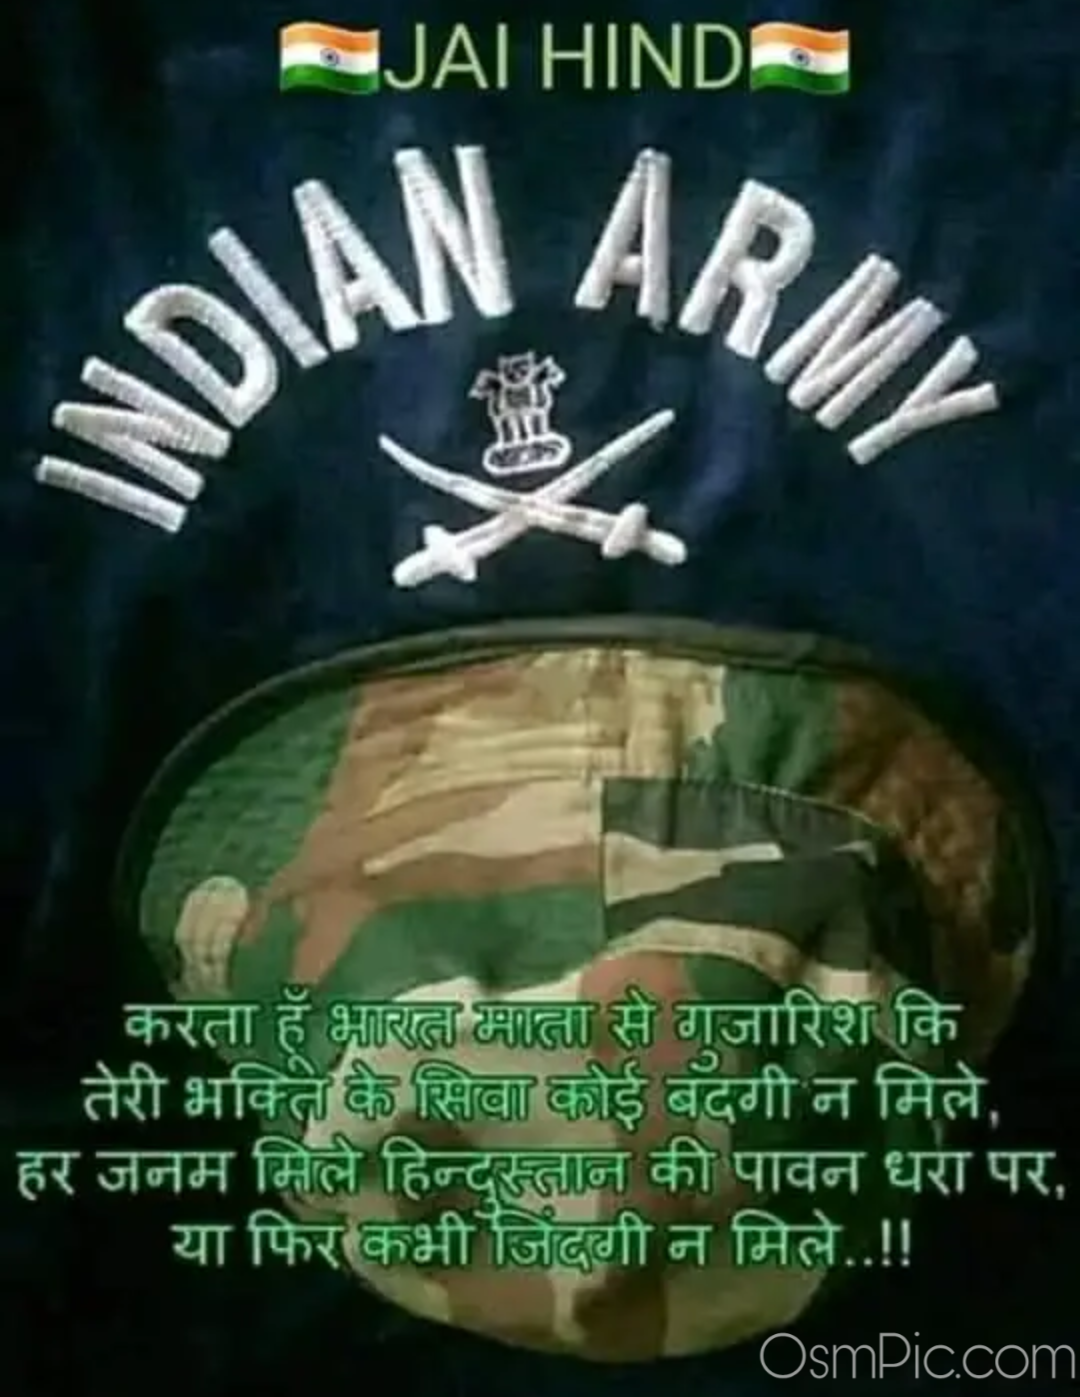 Top 50 ?? Indian Army Status Images Photos Wallpaper Shayari- OsmPic